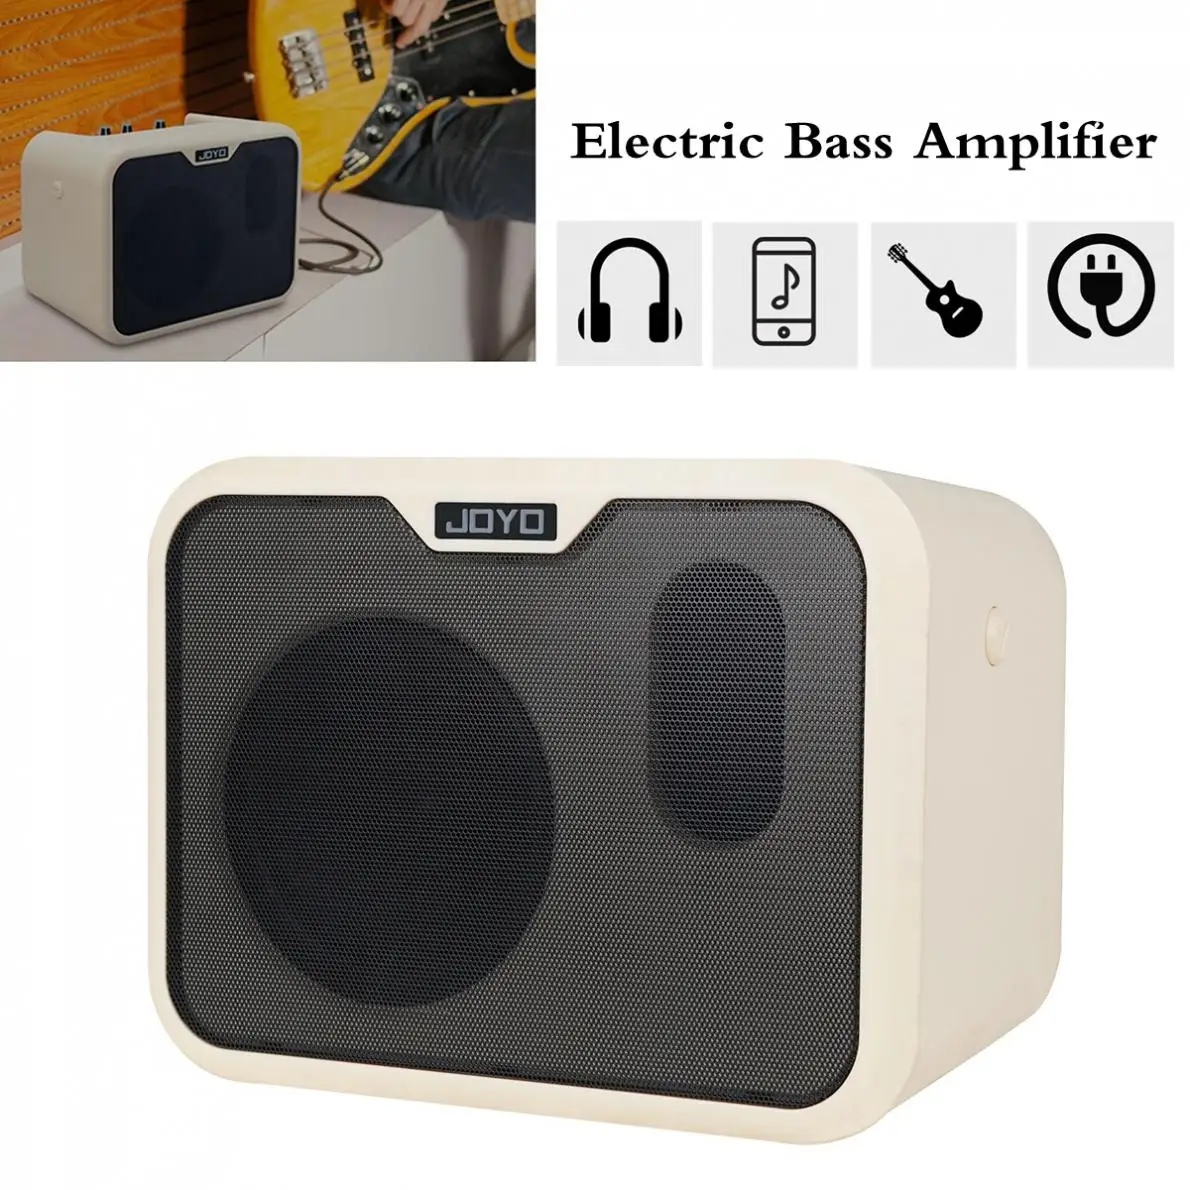 5 Inch Mini Portable Electric Bass Amplifier Speaker 10Watt Amp Normal / Drive Dual Channels  Power Adapter  Guitar Amplifiers enlarge